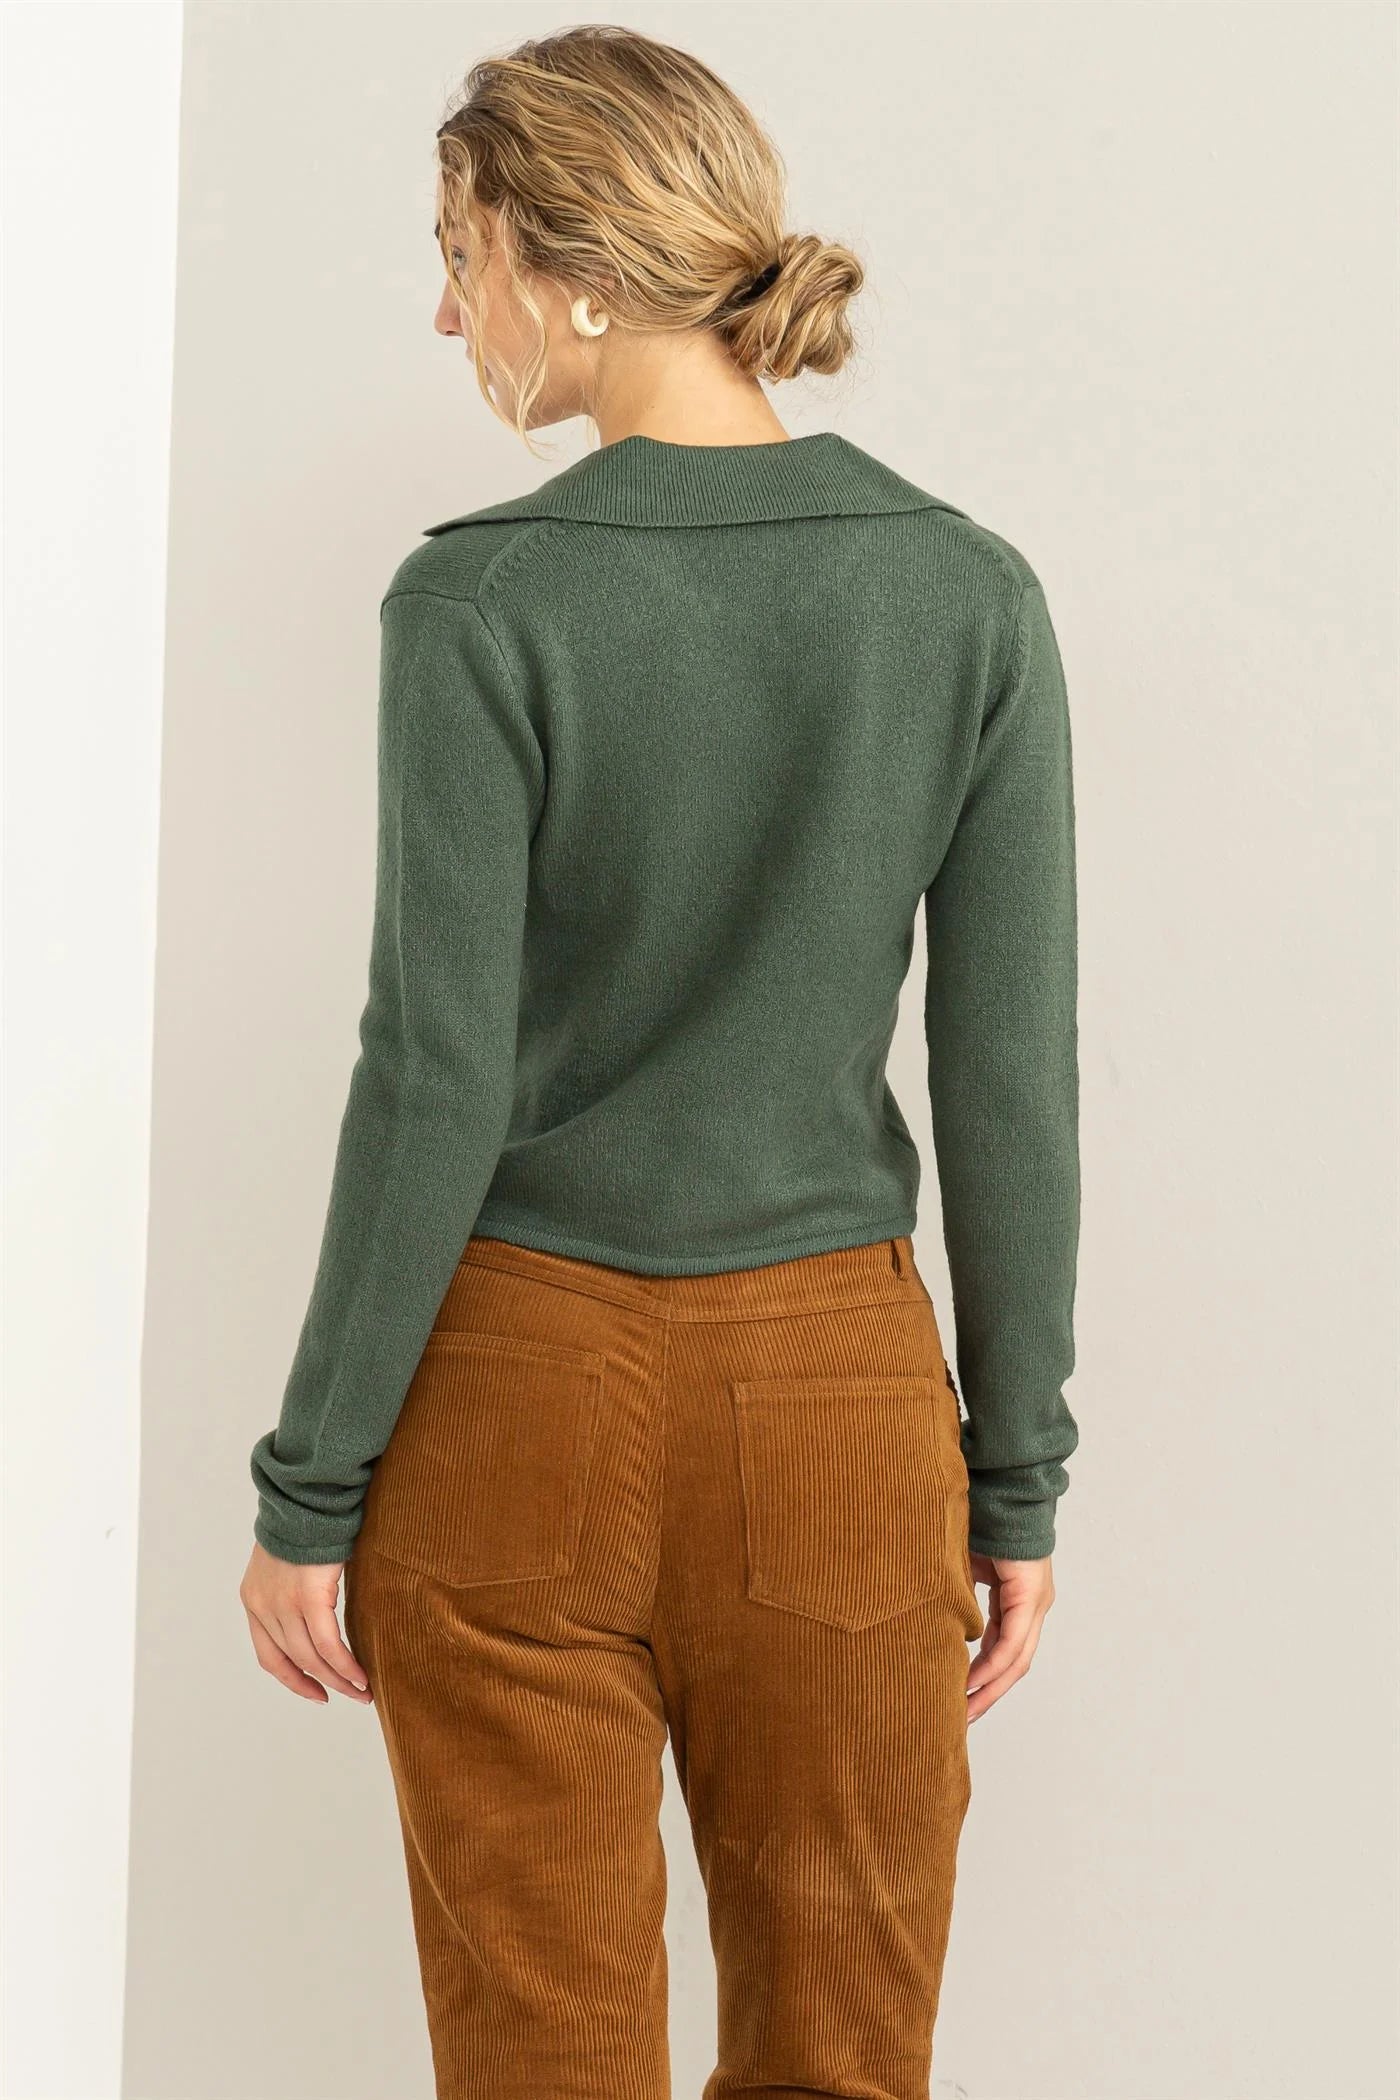 The Jade Sweater